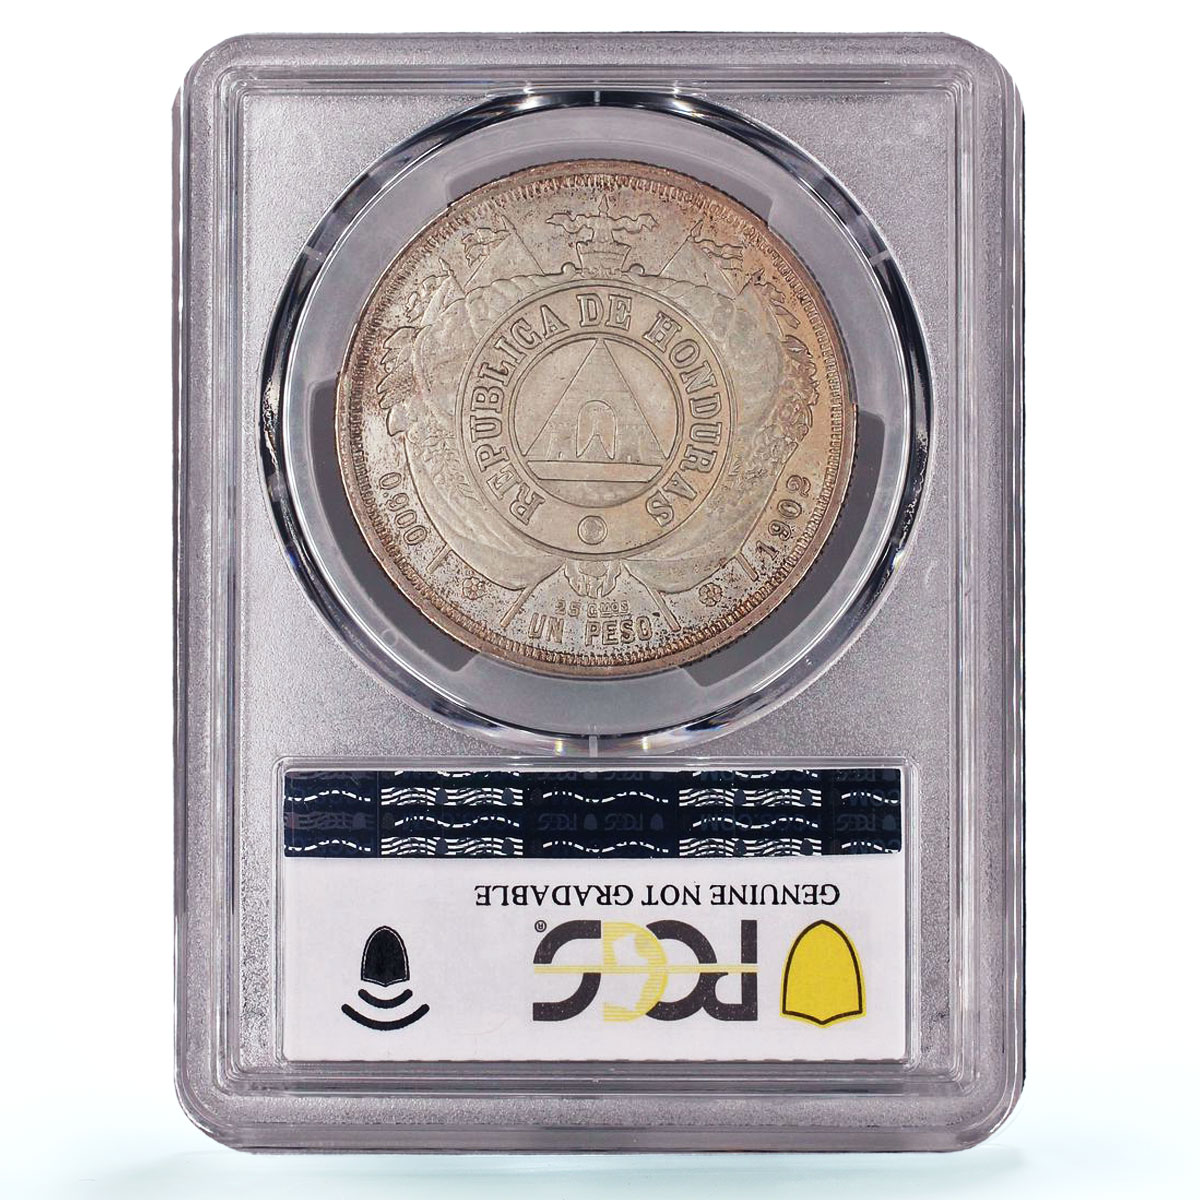 Honduras 1 peso Regular Coinage Liberty Libertad KM-52 AU PCGS silver coin 1902